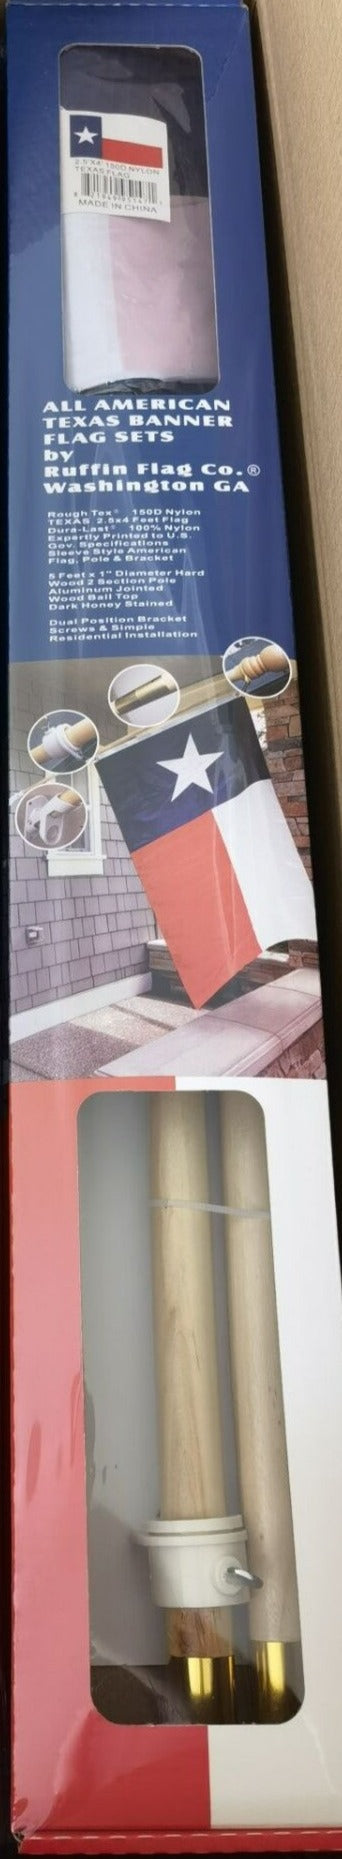 Texas Flag & Flagpole Kit Wooden 2 piece pole cast aluminum bracket nylon flag